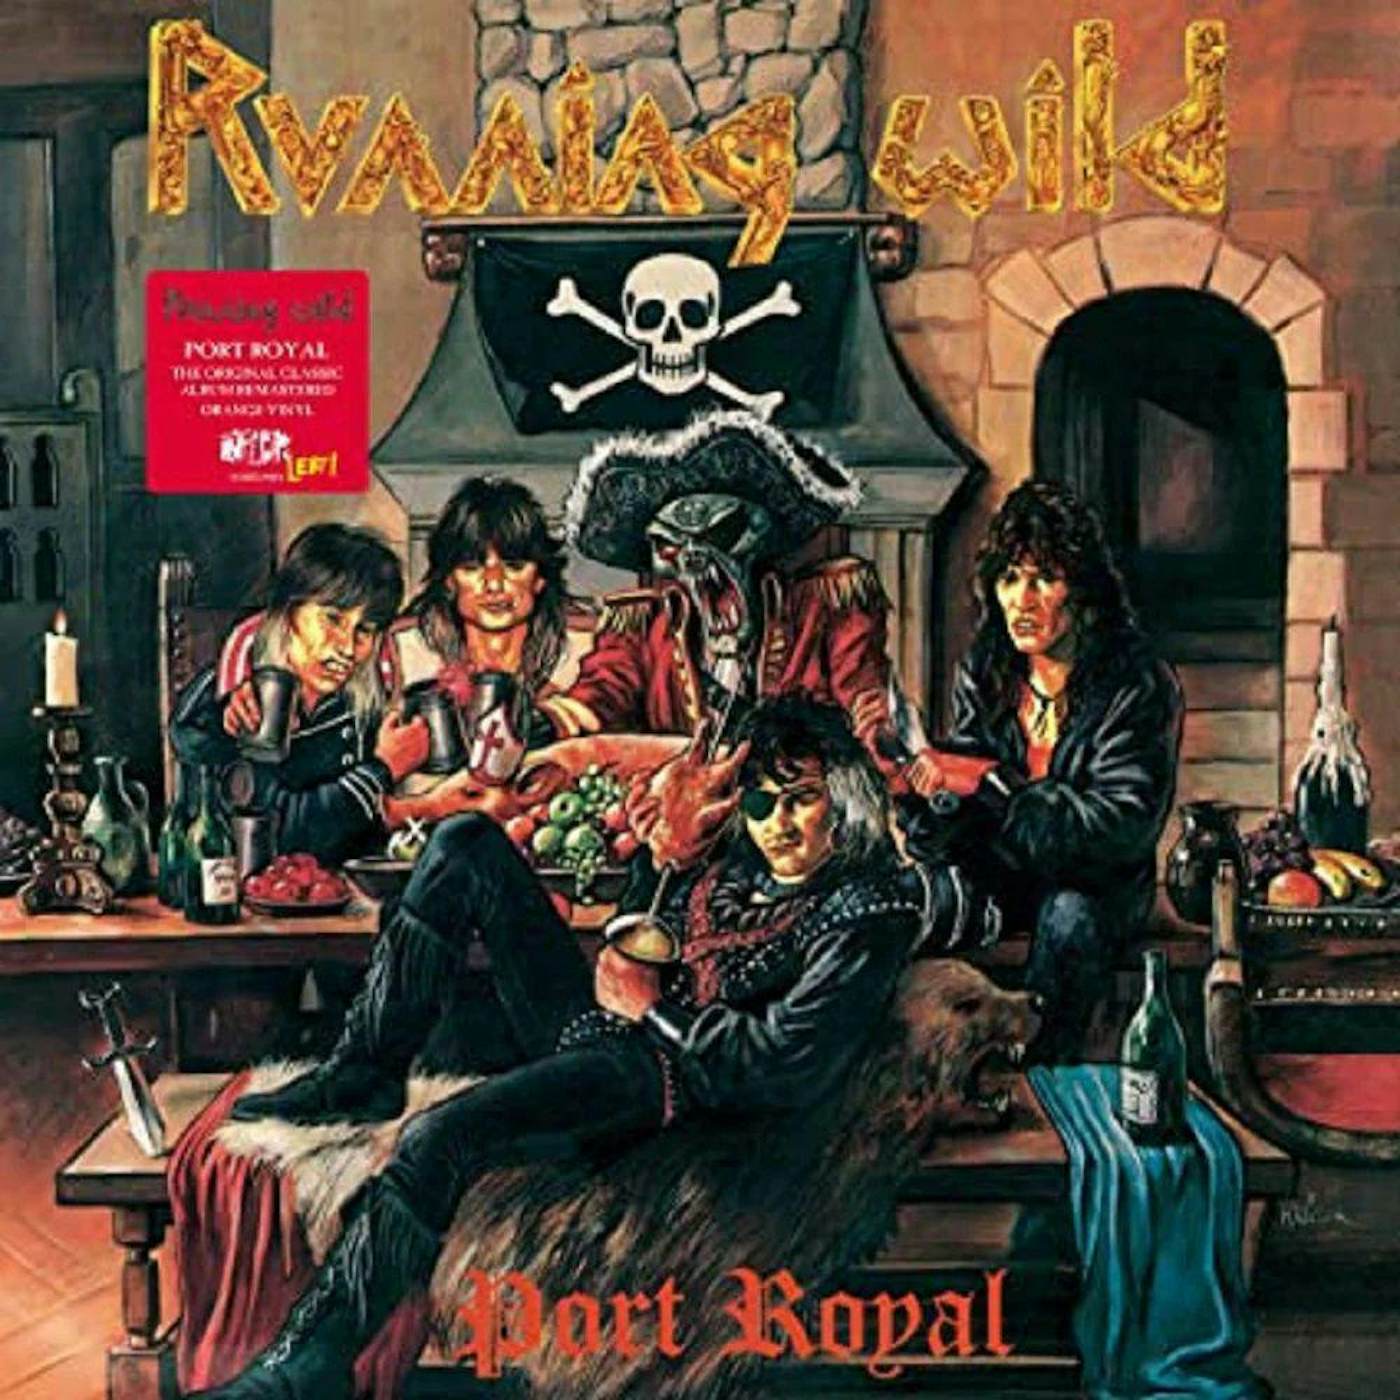 Running Wild Port Royal (Orange) Vinyl Record